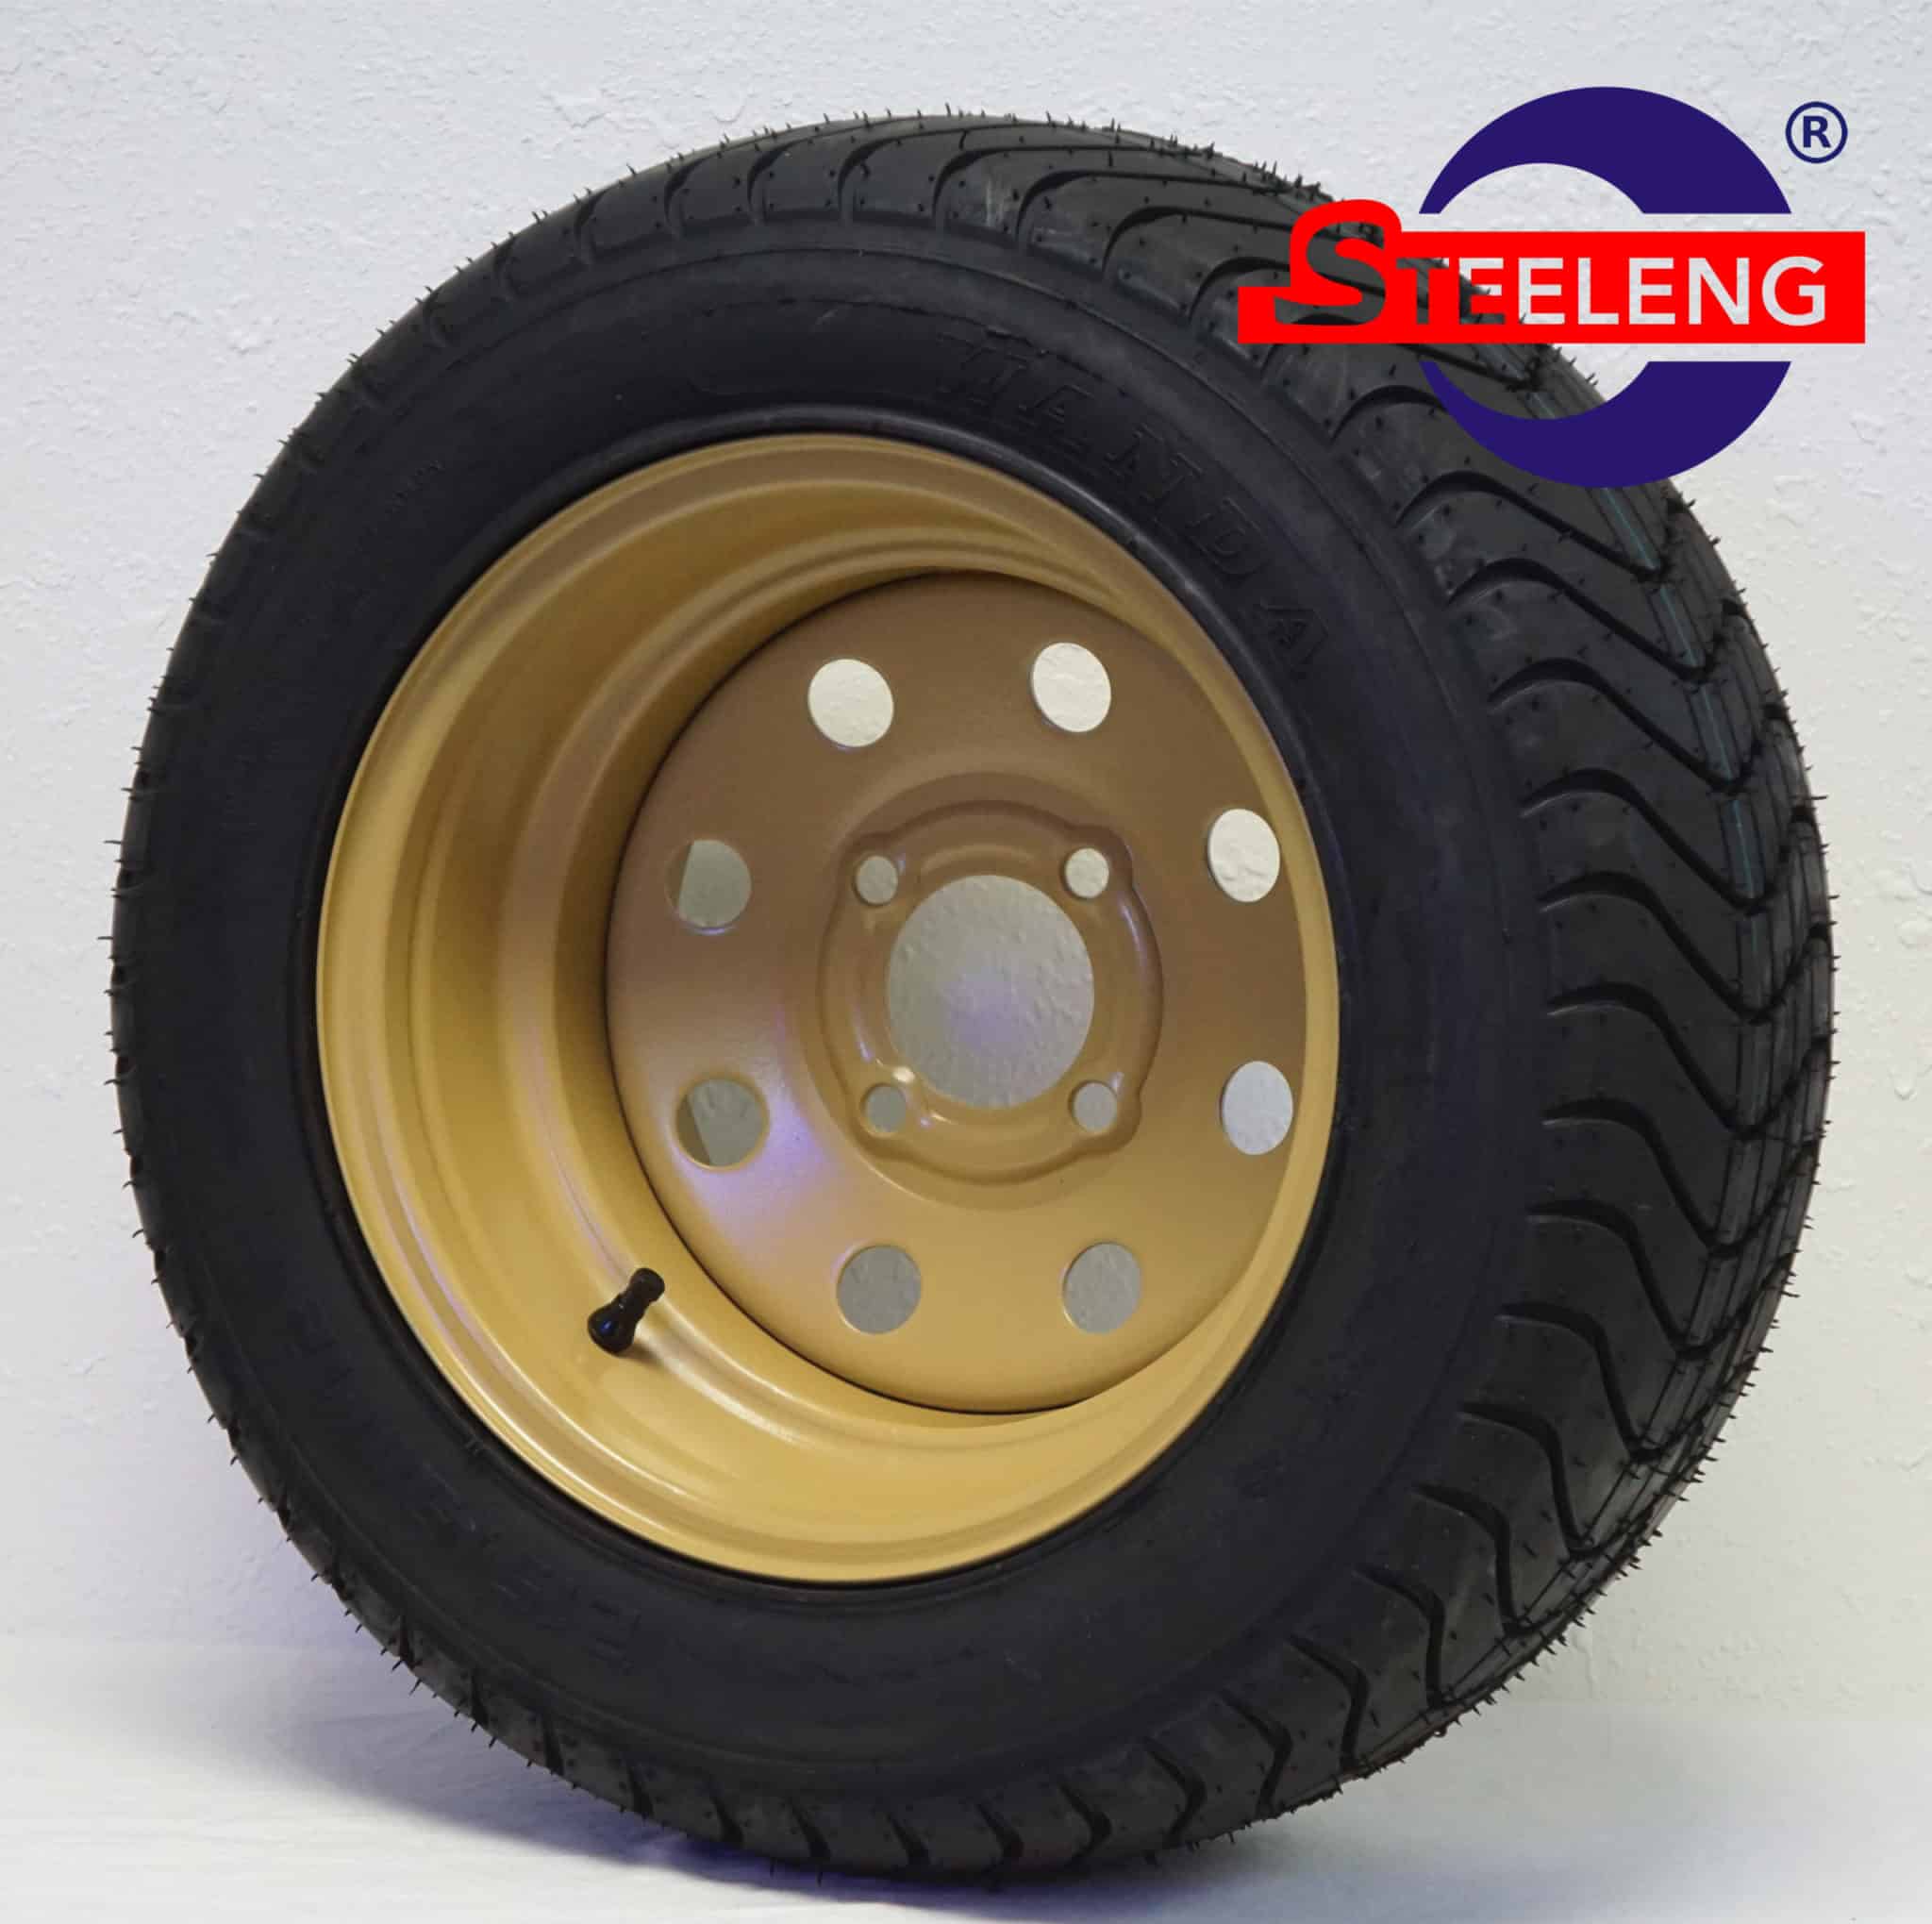 BNDL-SW1203-TR1213 12" Steel Wheel Desert Sand 8 Holes & 215/50-12 Low Profile Tire DOT Approved x4